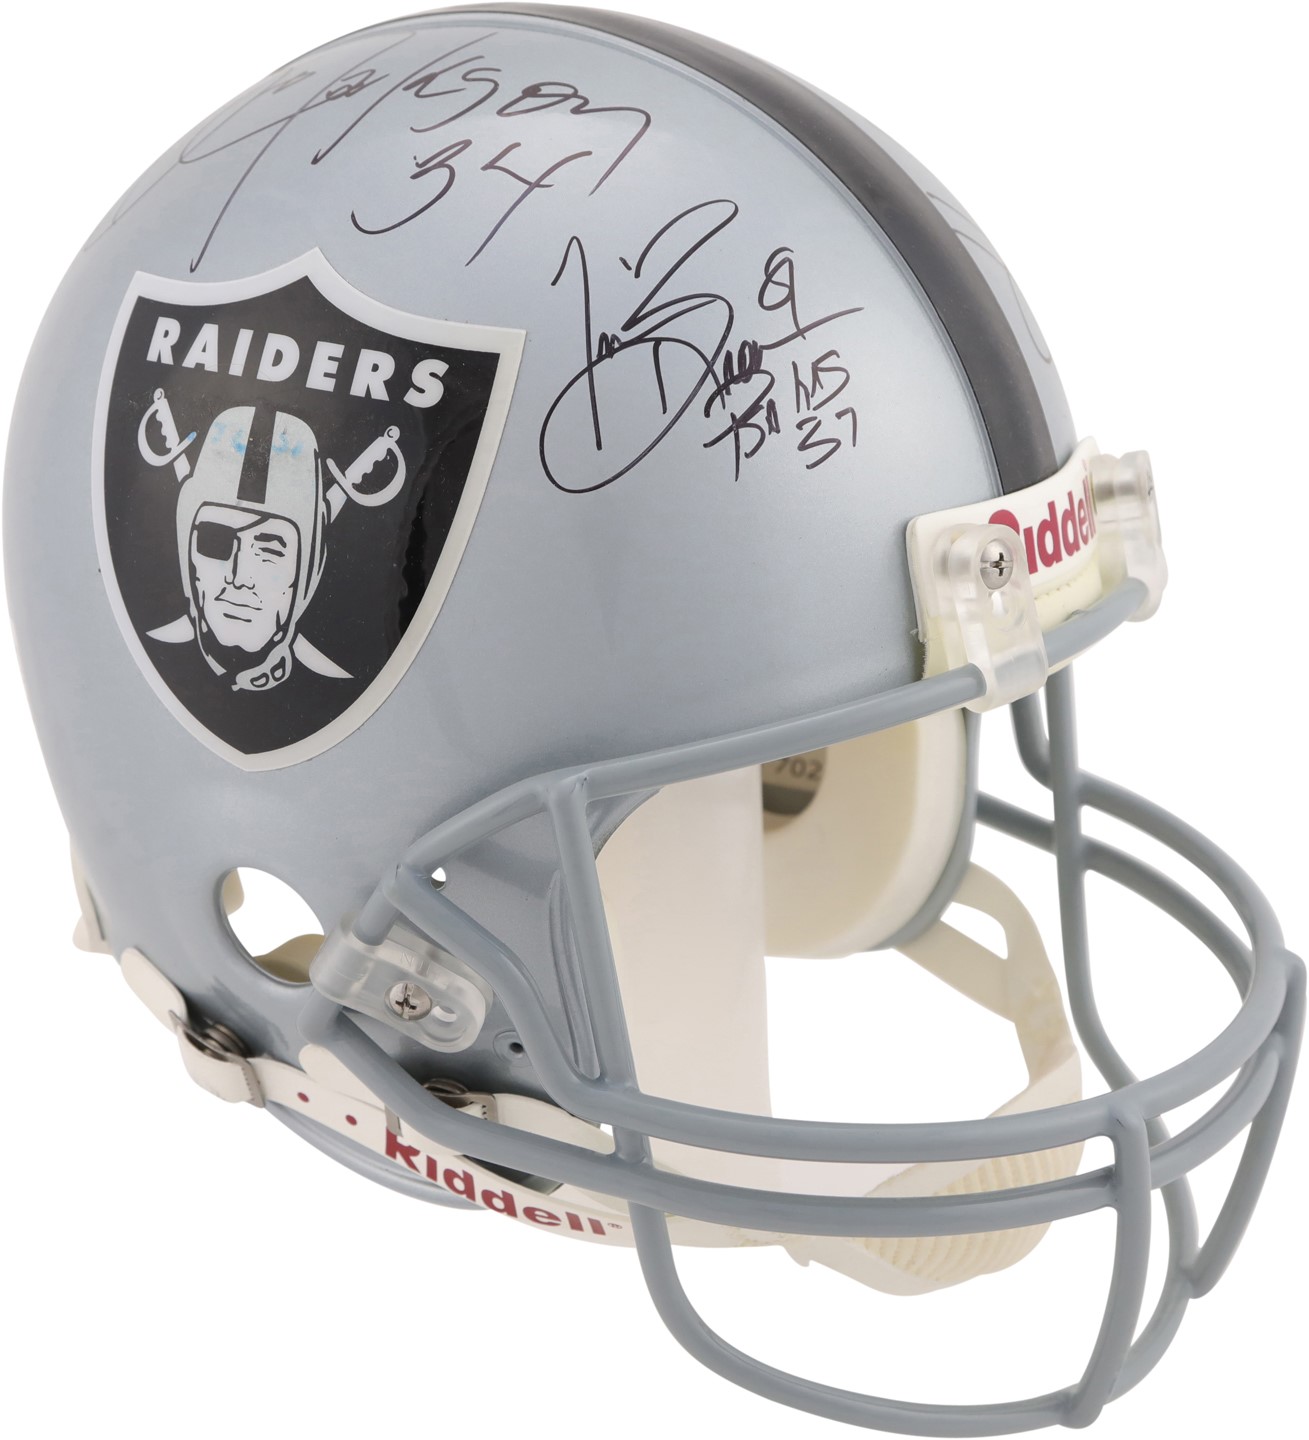 Bill Romanowski Storage Find - Raiders Legends Signed Helmet